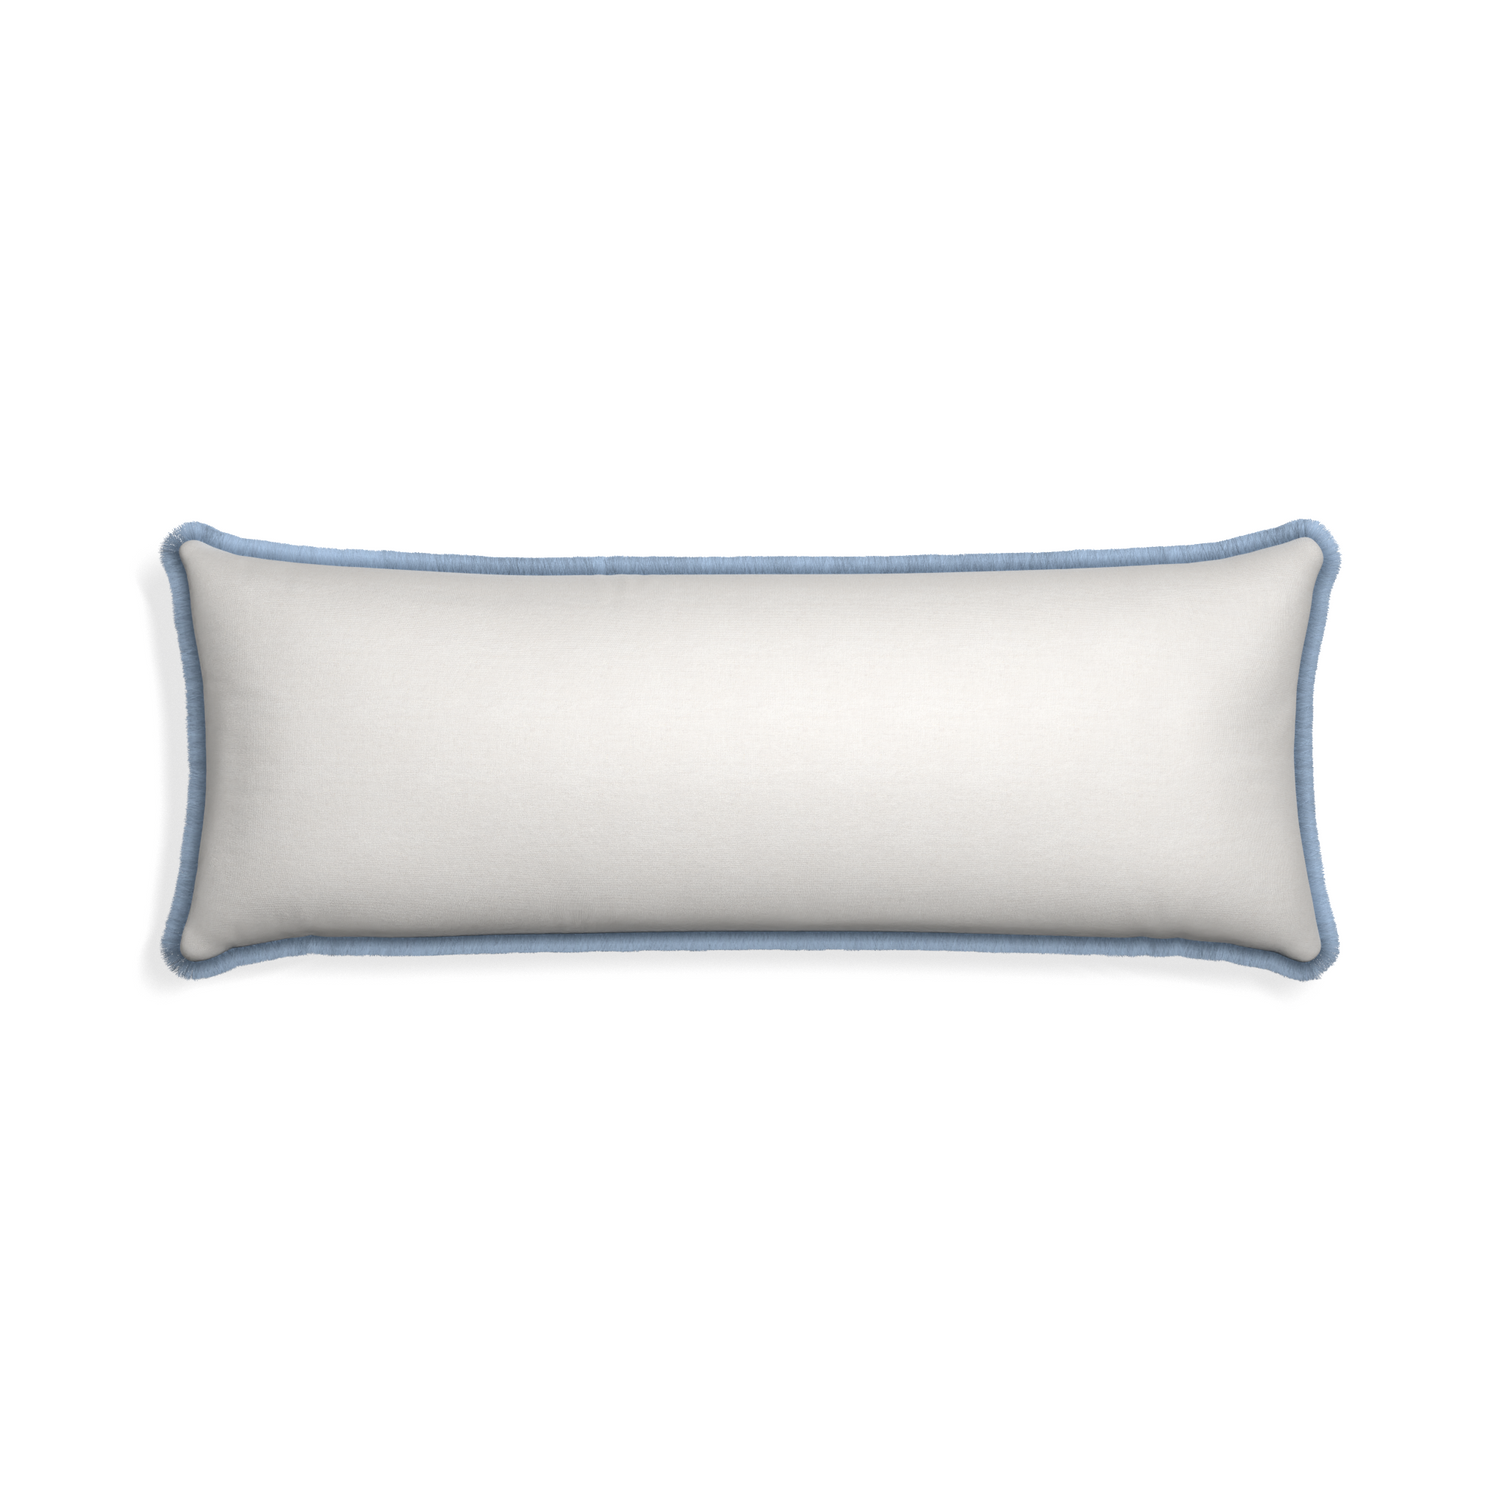 Xl-lumbar flour custom pillow with sky fringe on white background